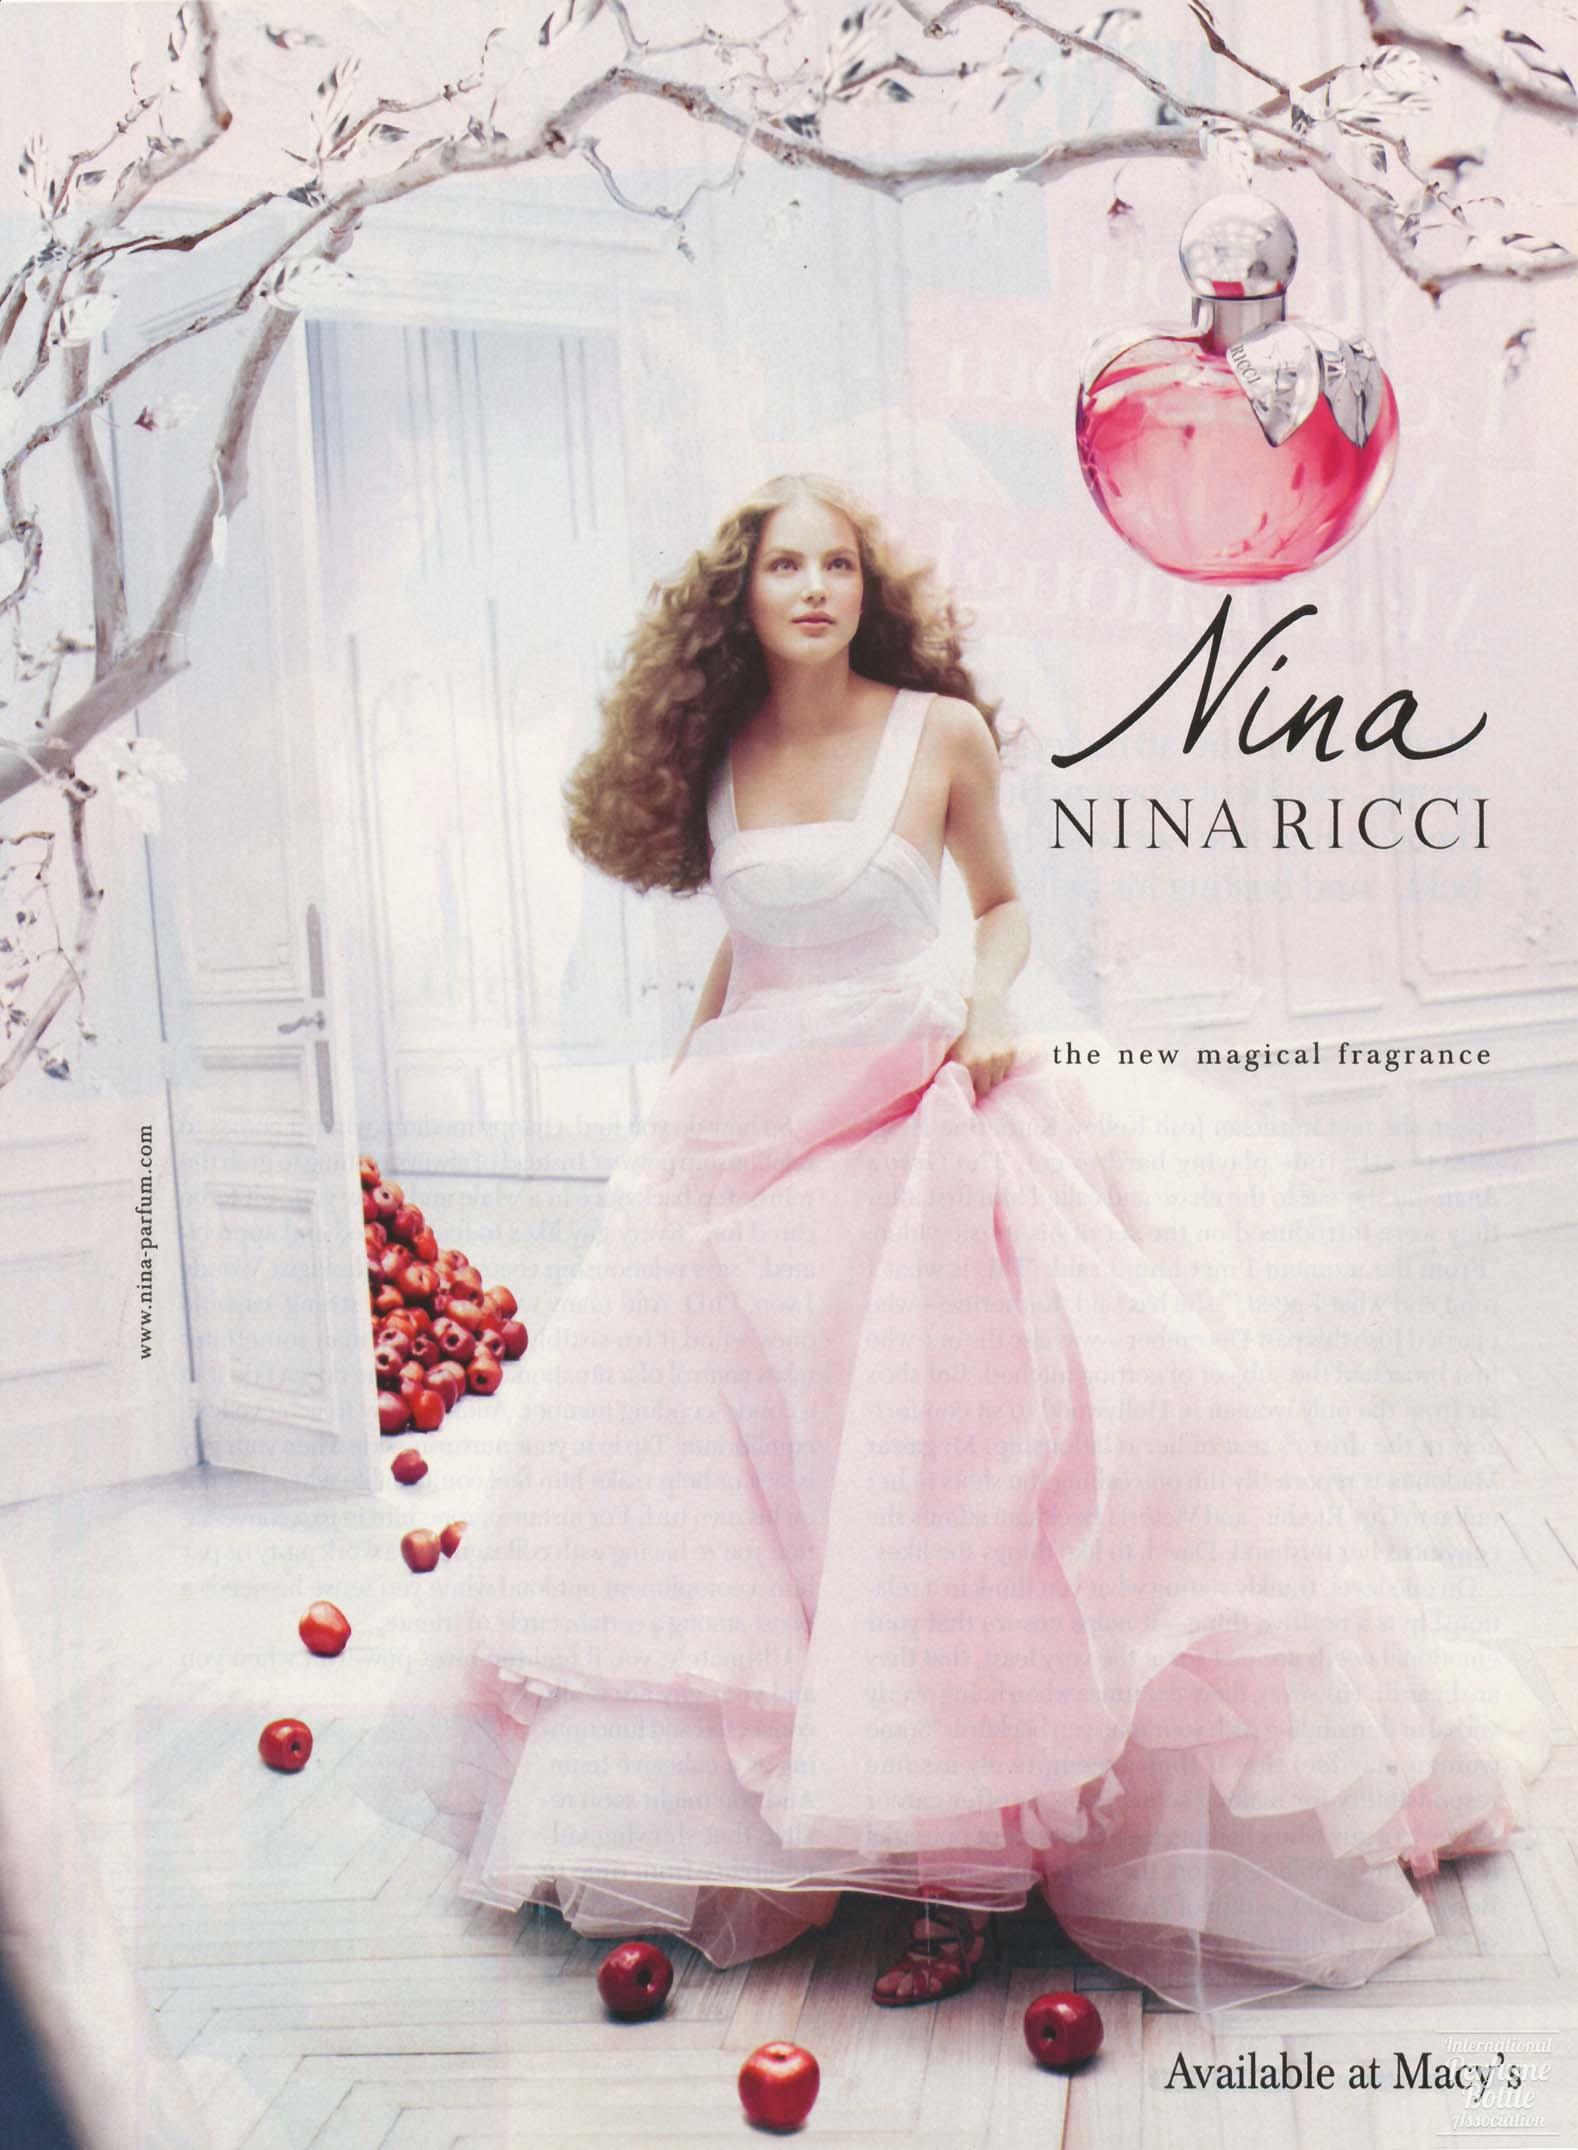 "Nina" by Nina Ricci Advertisement - 2008